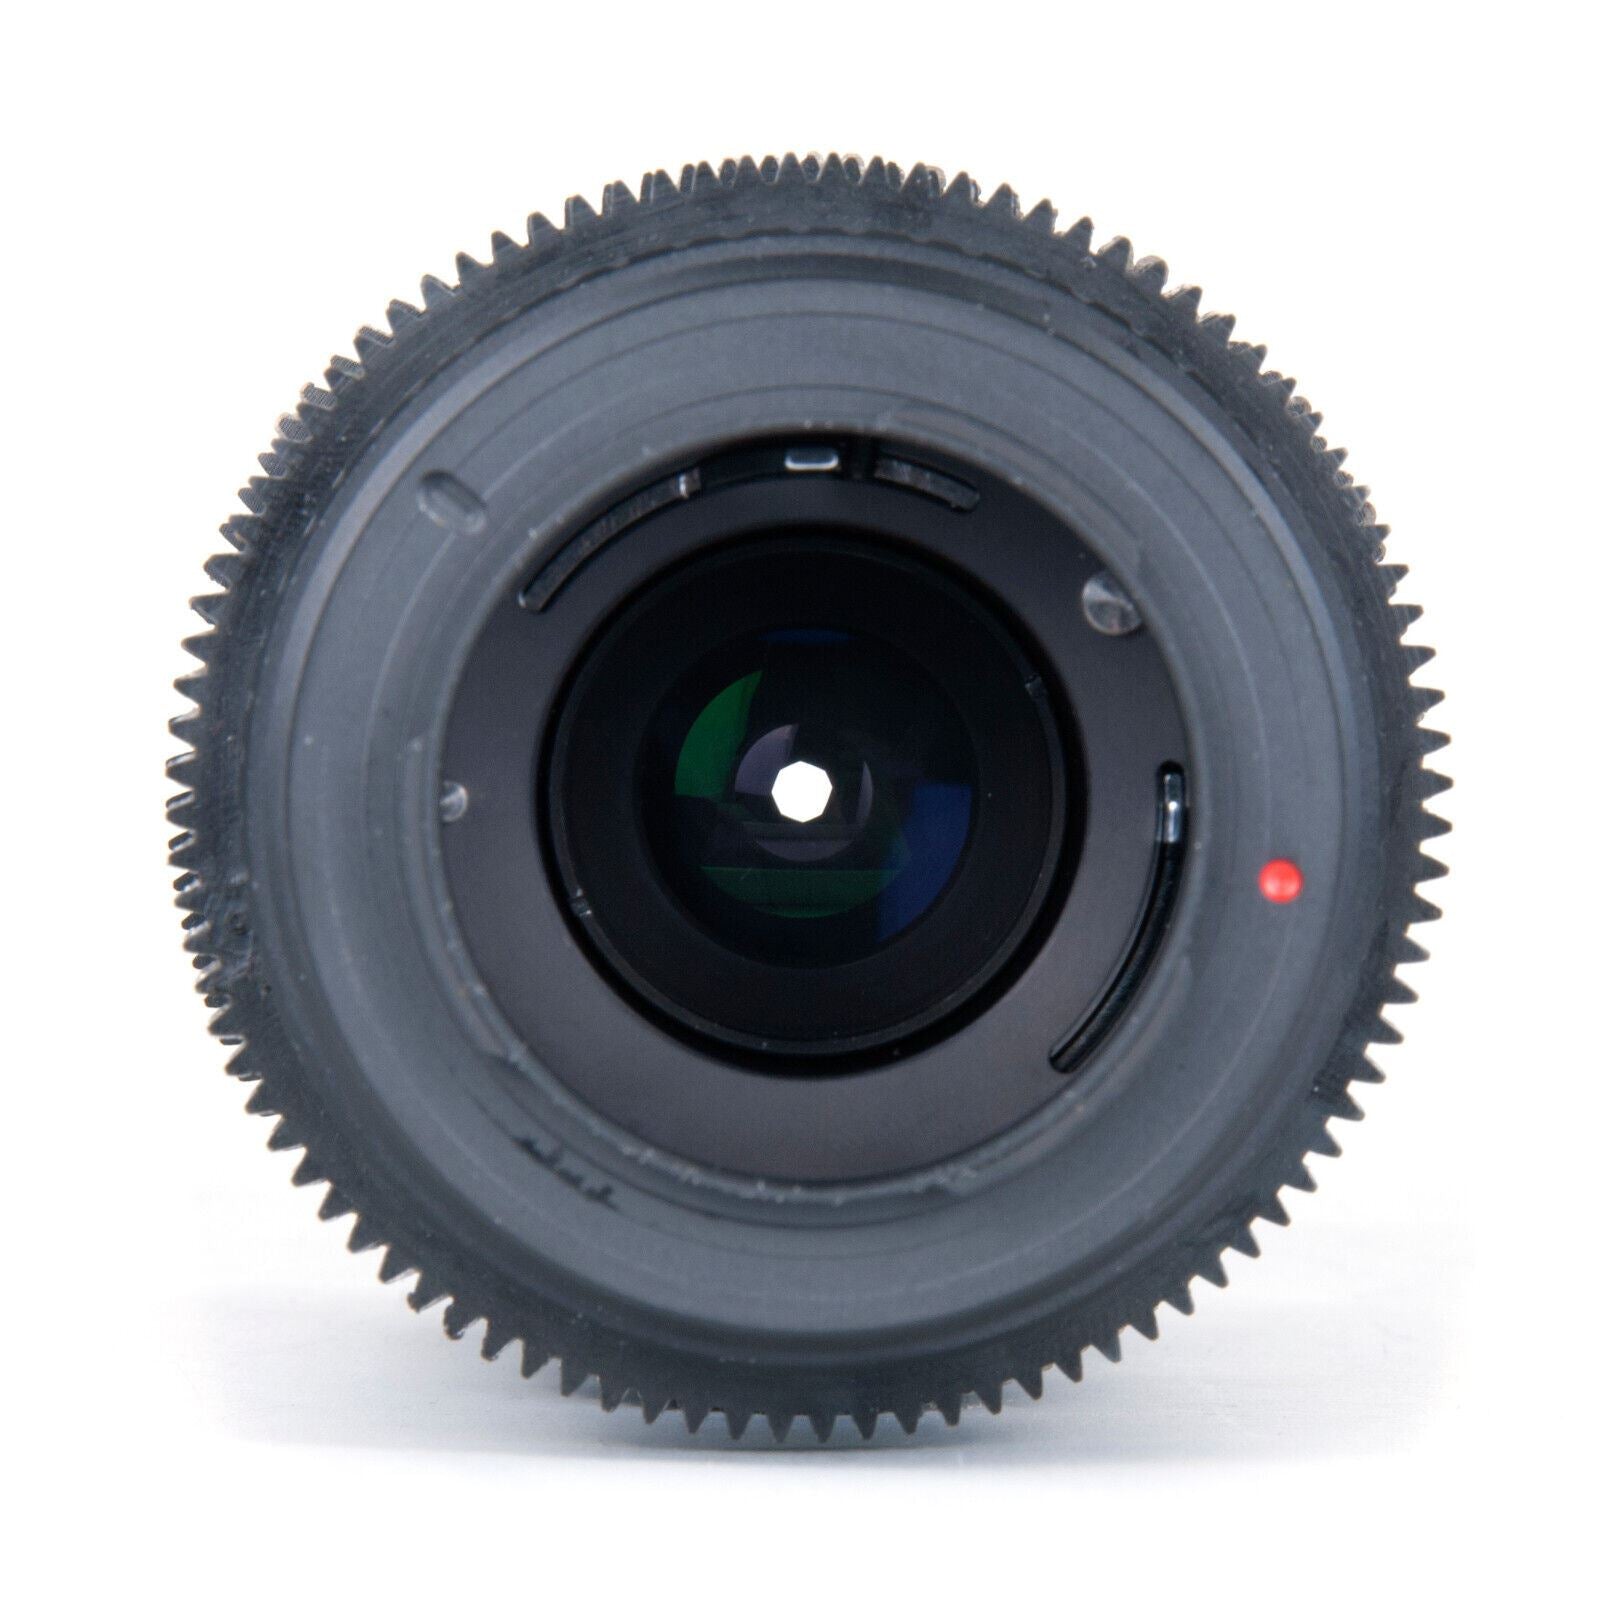 Cine Modded Vivitar Auto Telephoto 200mm F3.5 w/ Anamorphic Bokeh For Sony-E! - TerPhoto Store